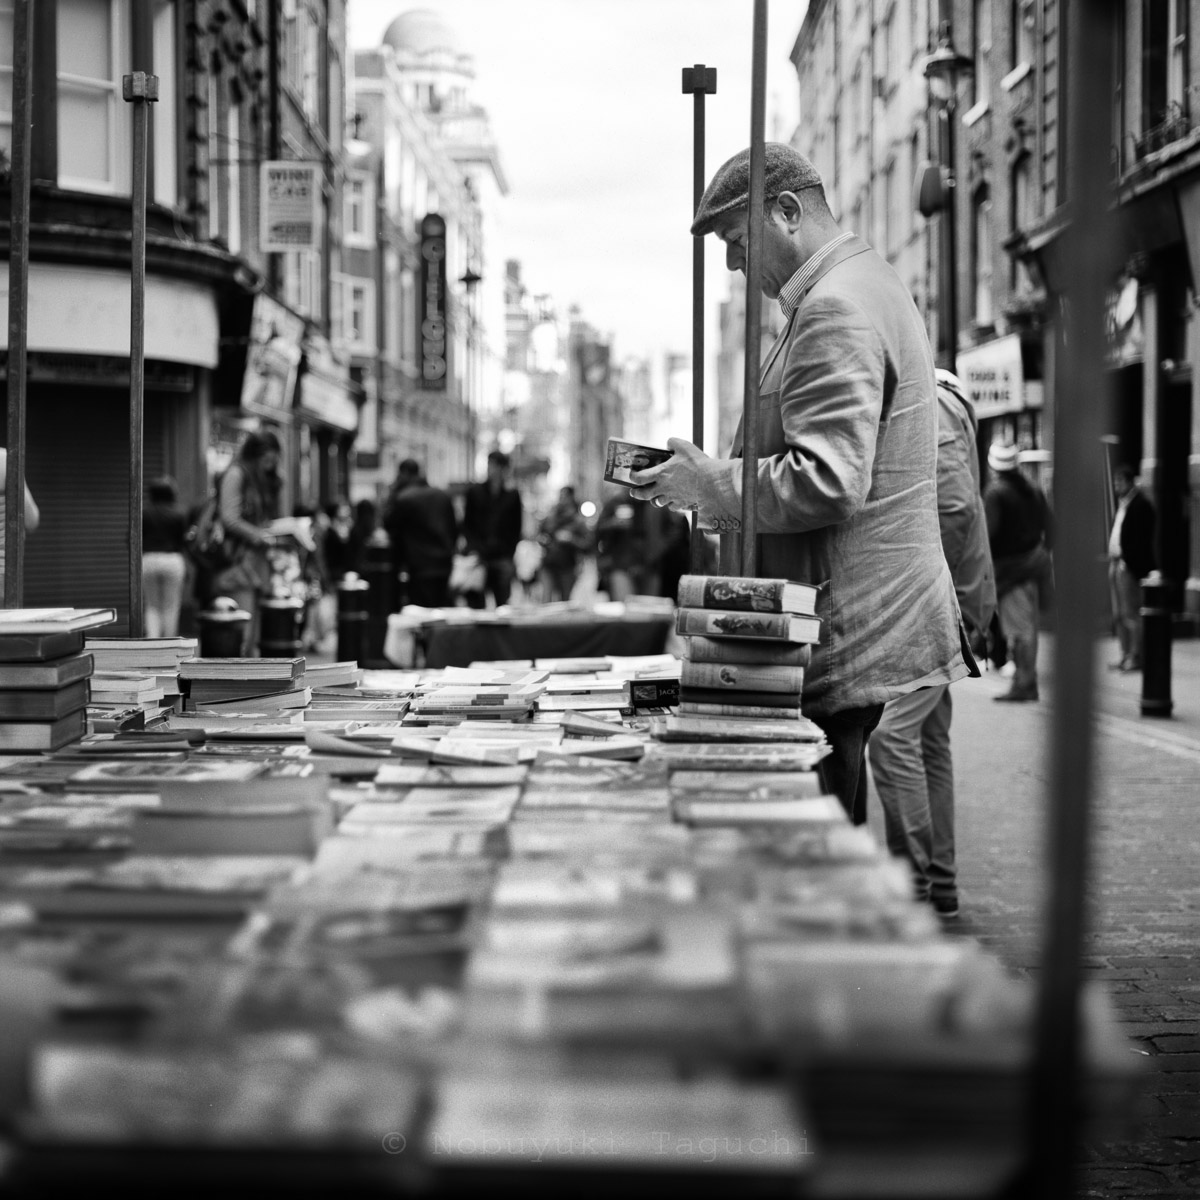 Street Photography London 120 Film  - Second hand books in Rupert Street, Soho London